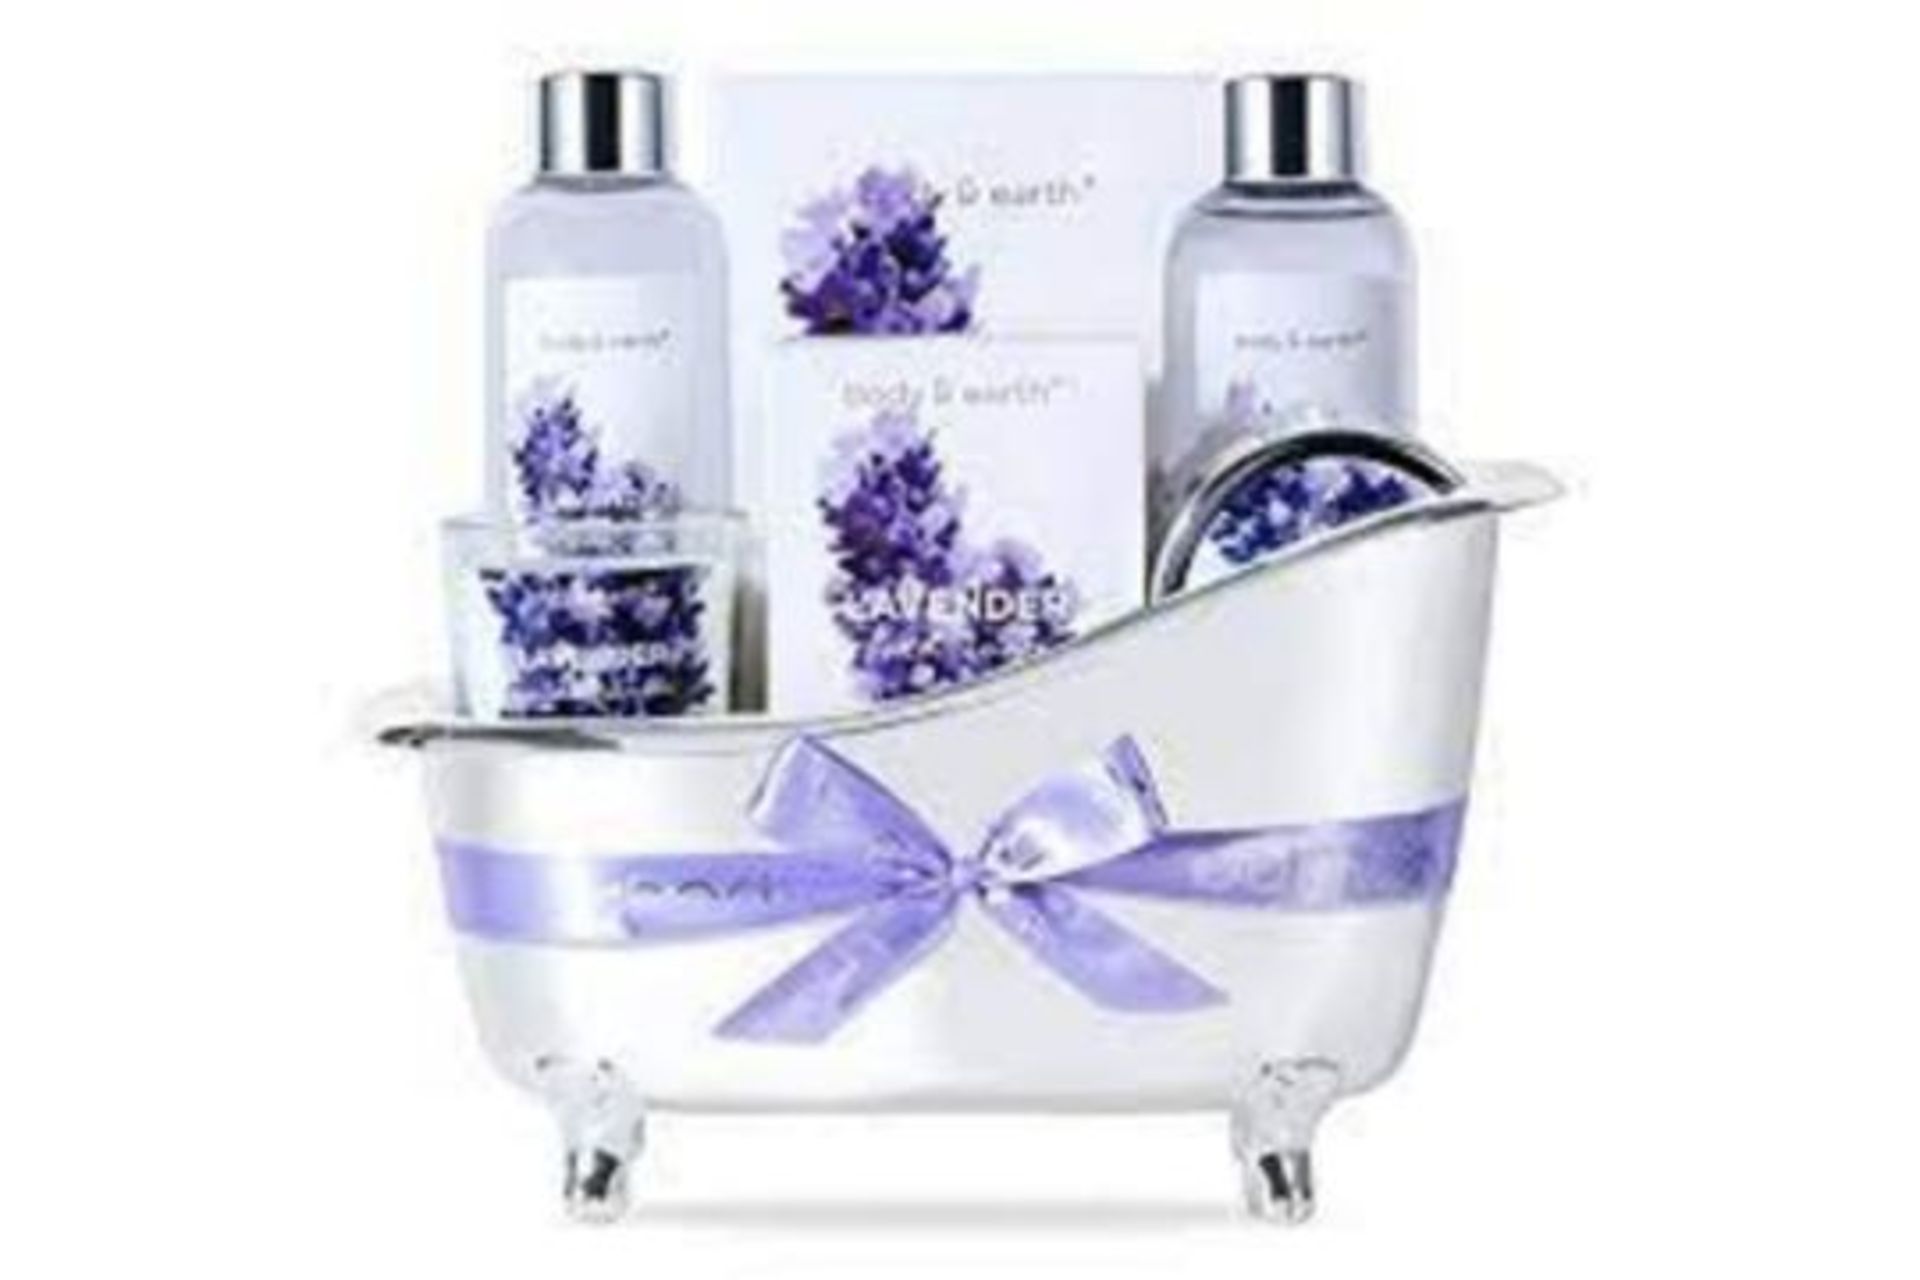 3 x NEW PACKAGED Lavender Spa Bathtub Gift Sets. (SKU: SP-18-02). Natural Bath Spa Set: Our spa gift